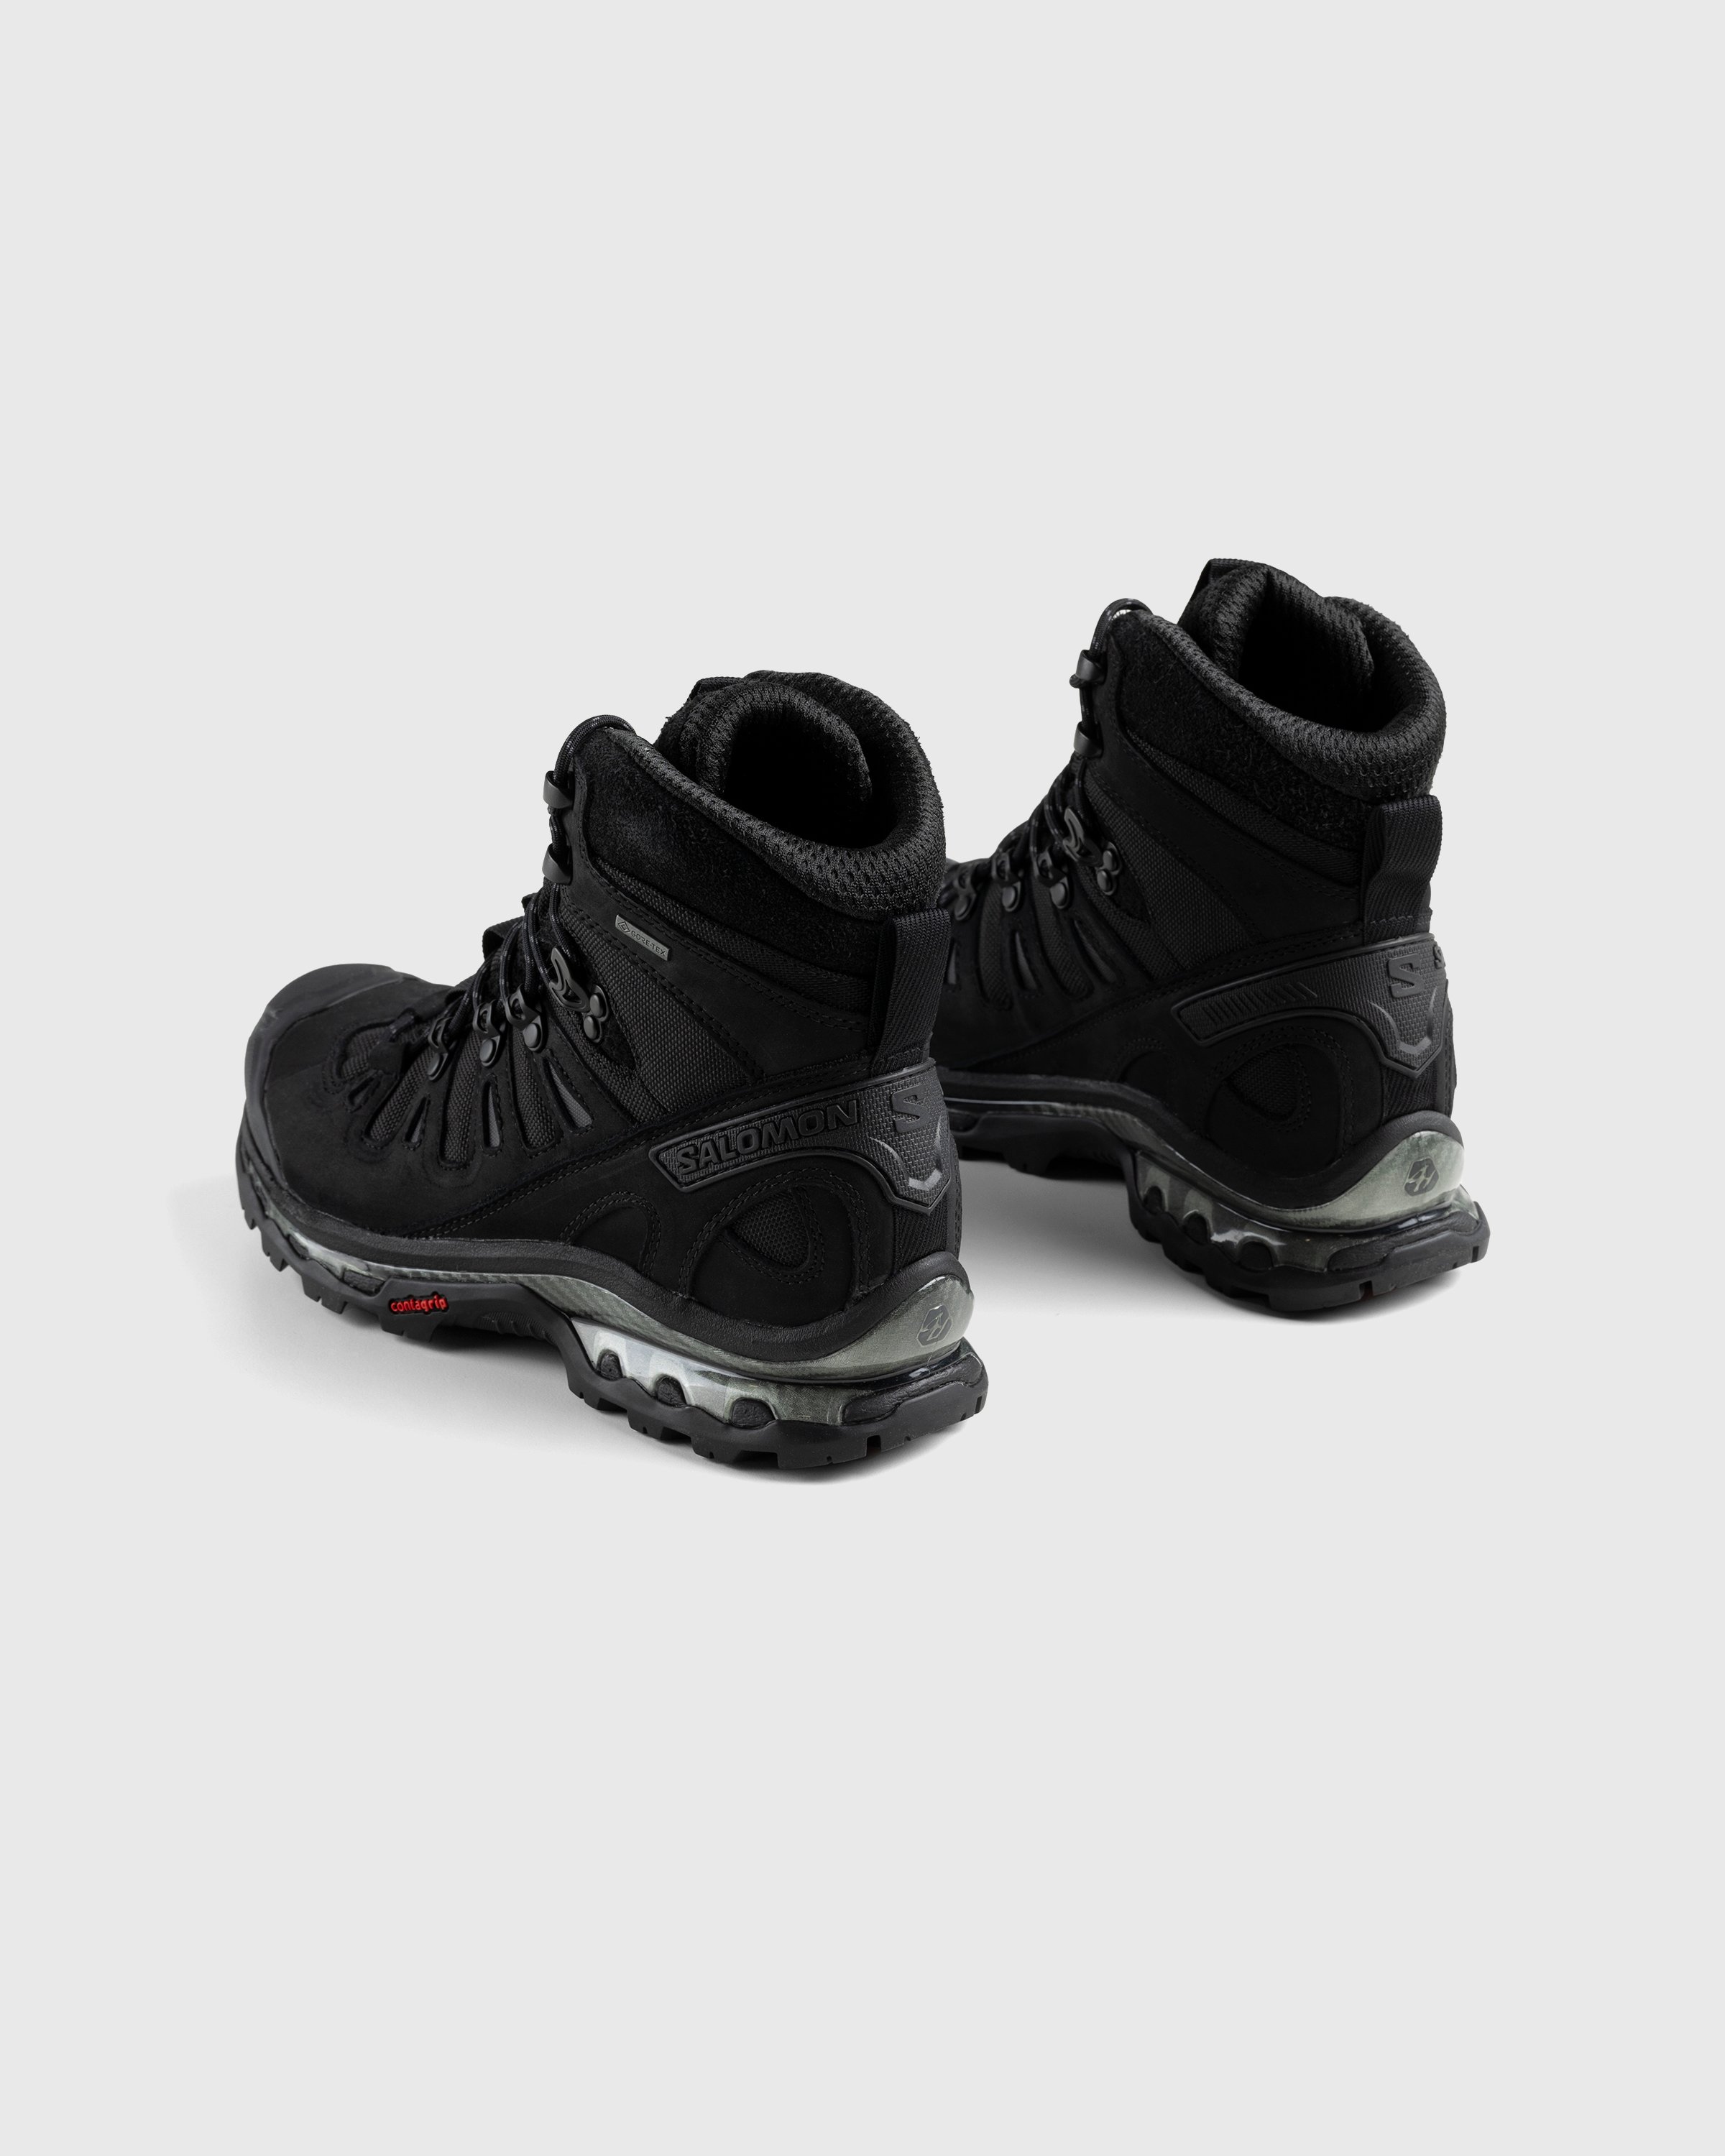 Salomon - Quest 4D GTX Advanced Black - Footwear - Black - Image 4